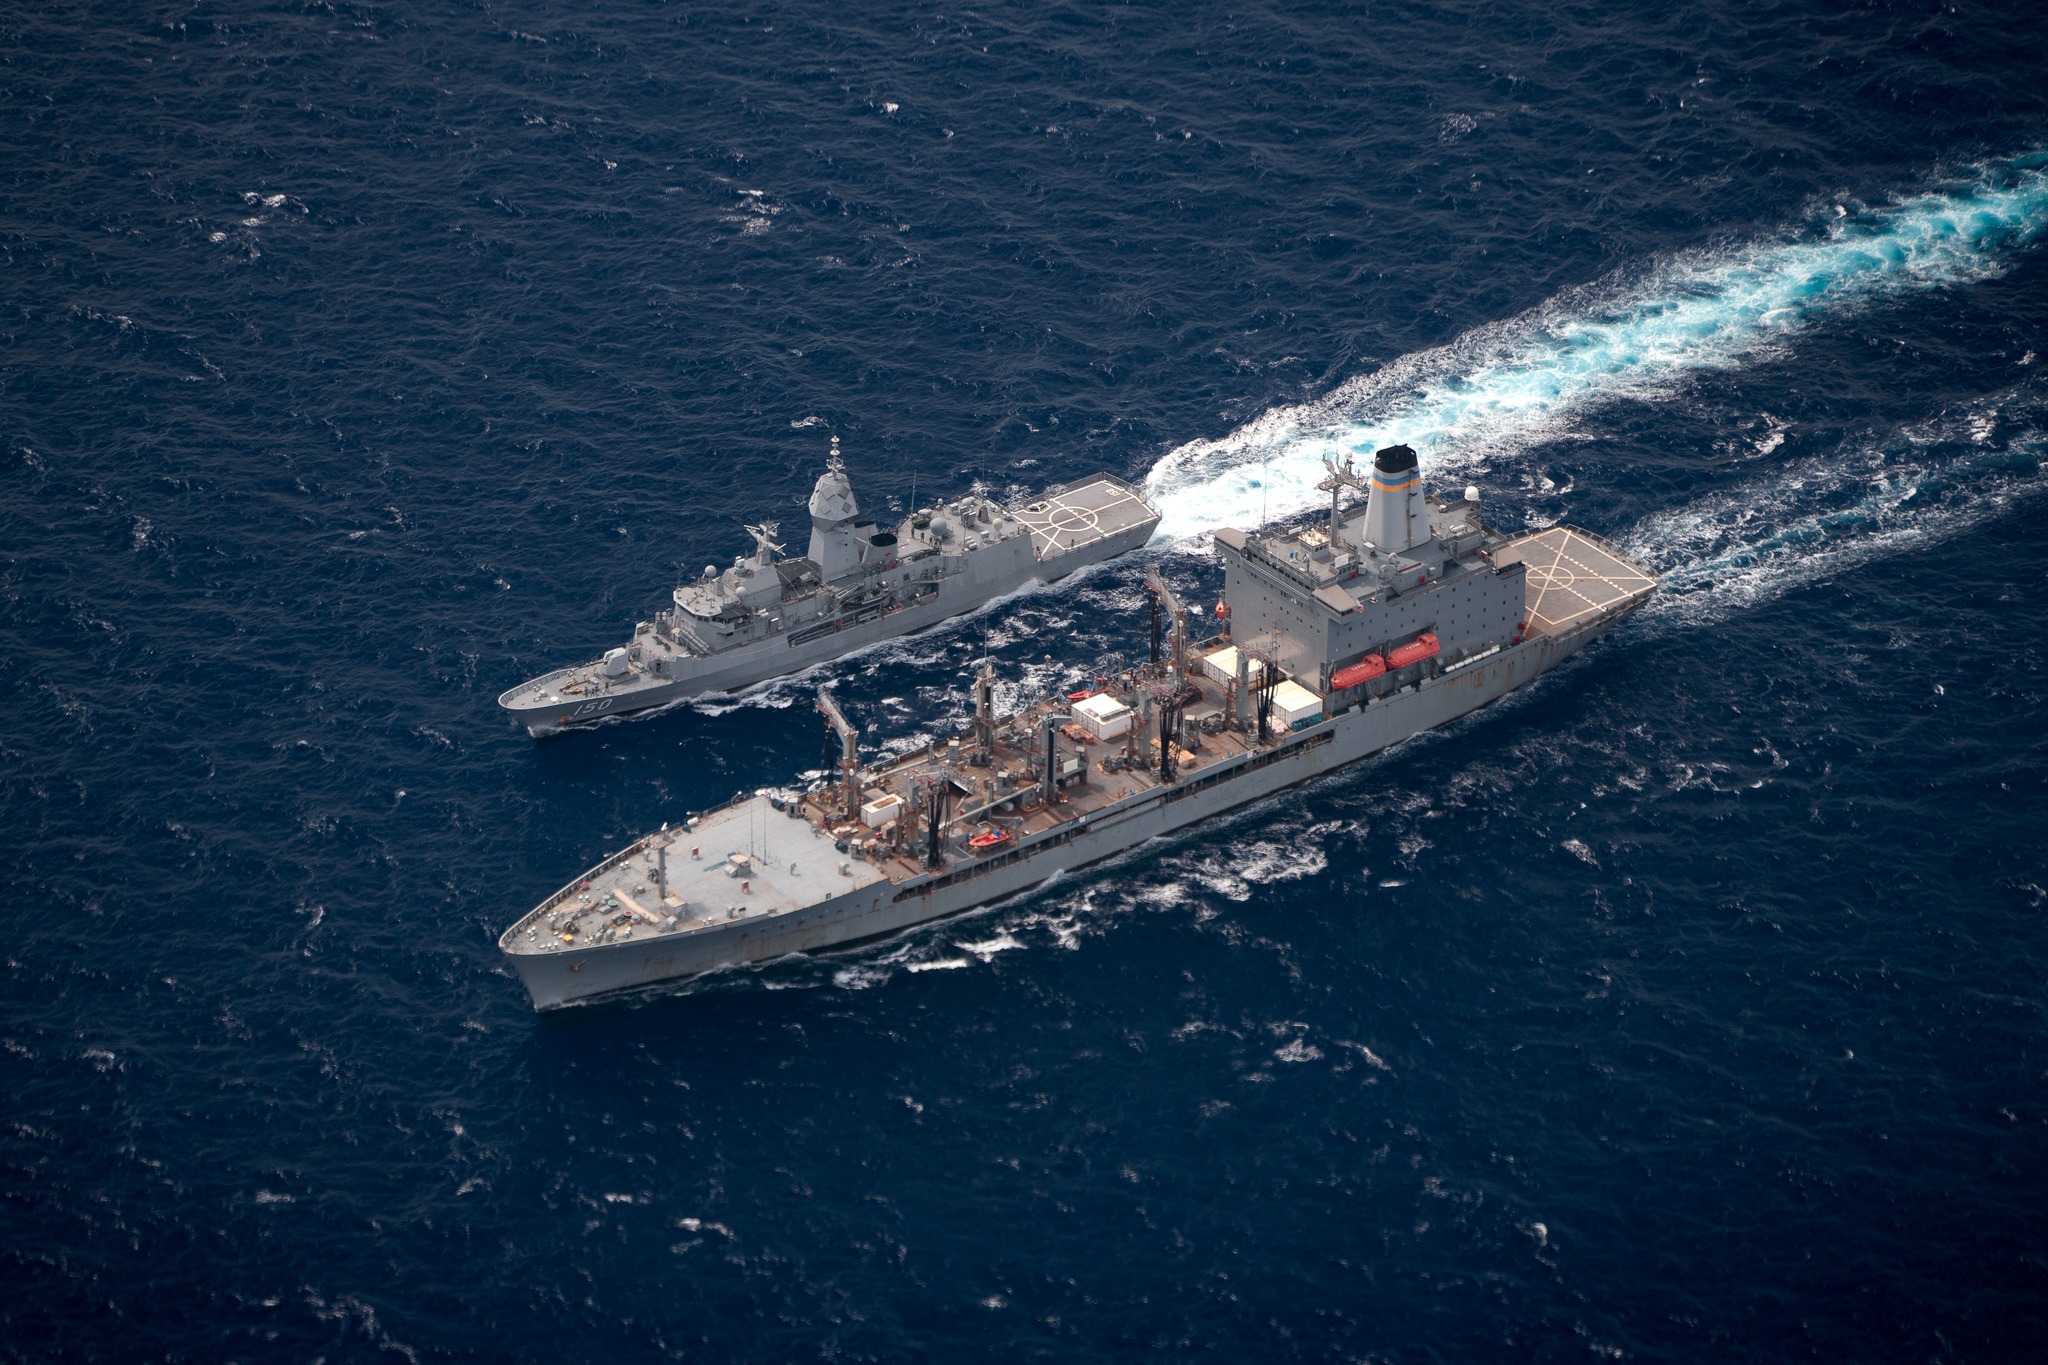 HMAS Anzac III sails alongside USNS Rappahannock. The photo is taken at a bird's eyeview. The sea is a deep blue.